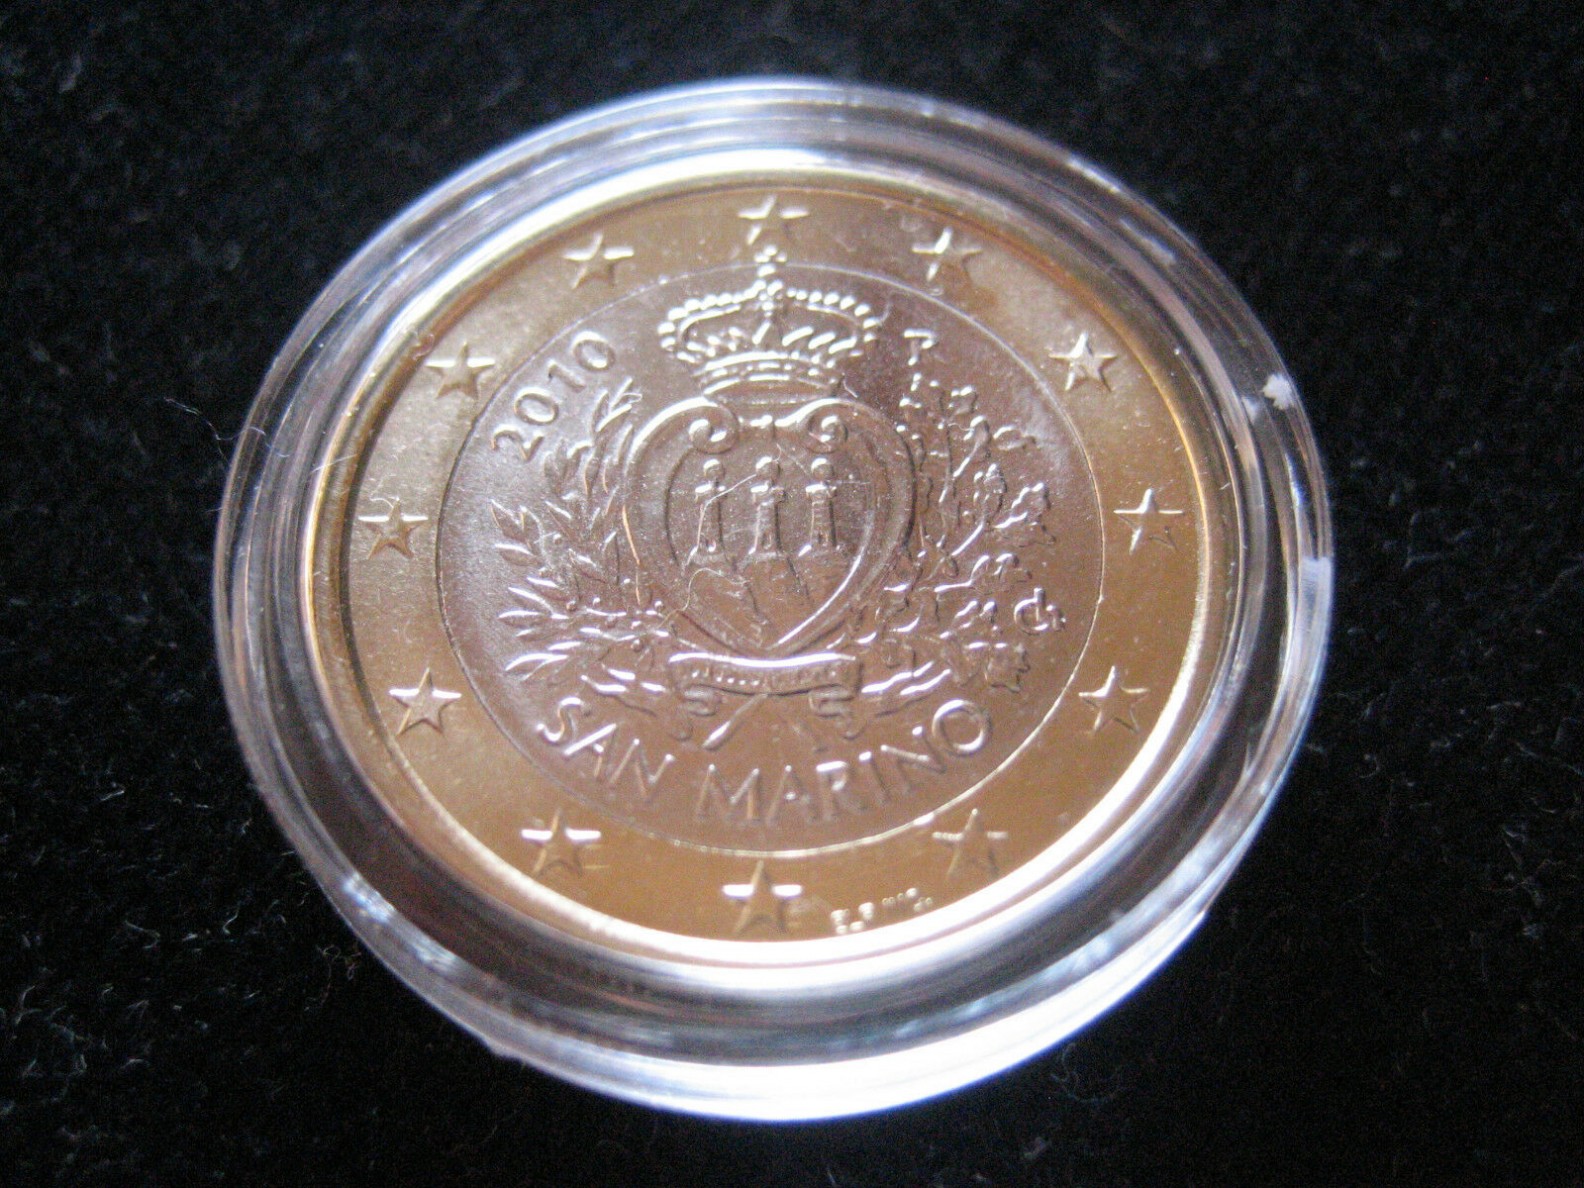 ЮАР запайка 2010 монеты. Евро январь 2023